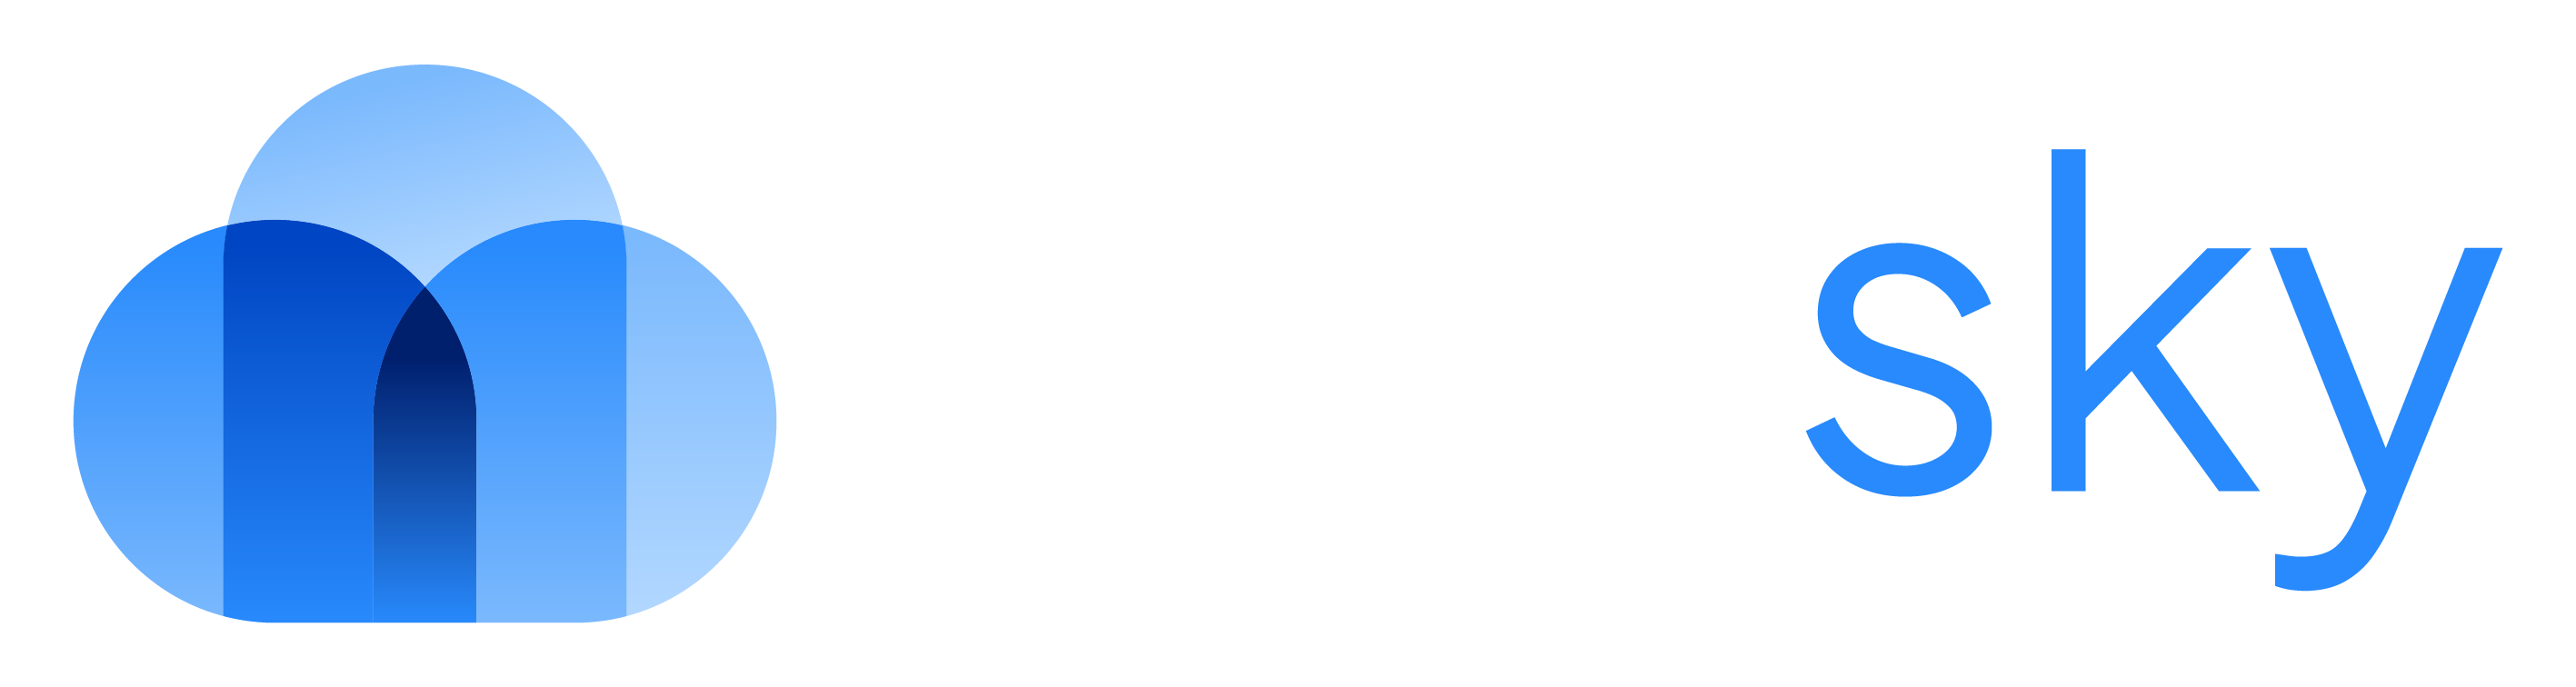 blue sky wellness clinic3-02